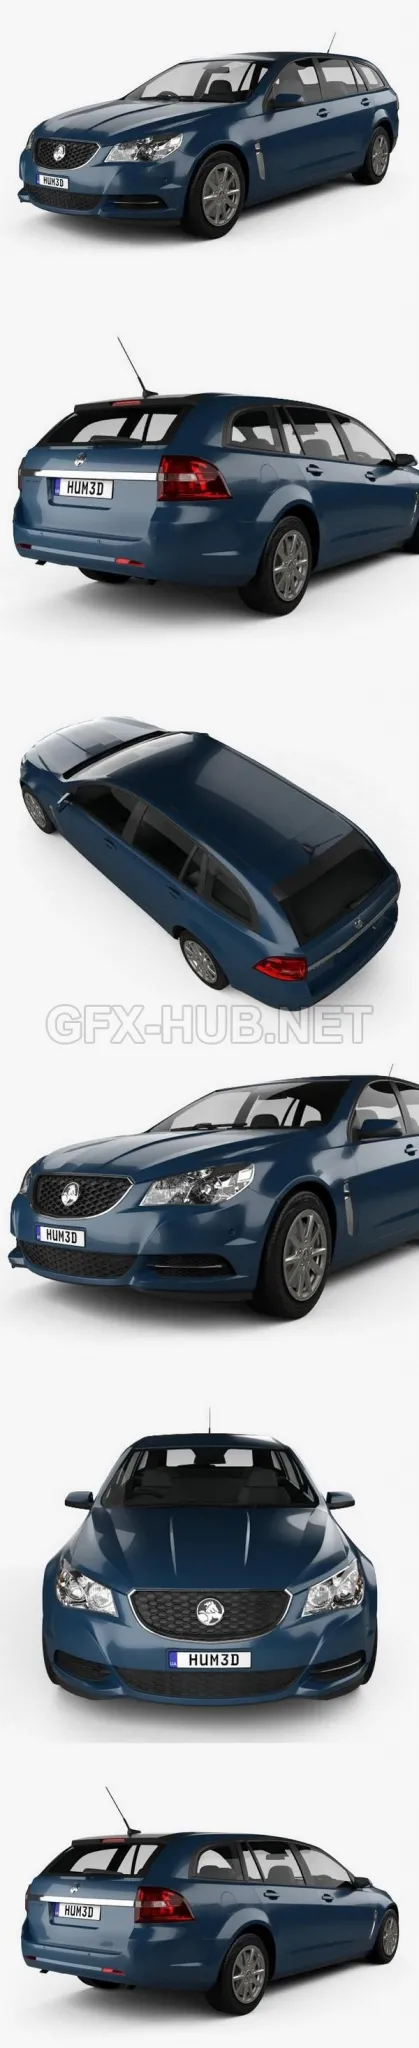 CAR – Holden Commodore Evoke sportwagon 2013  3D Model